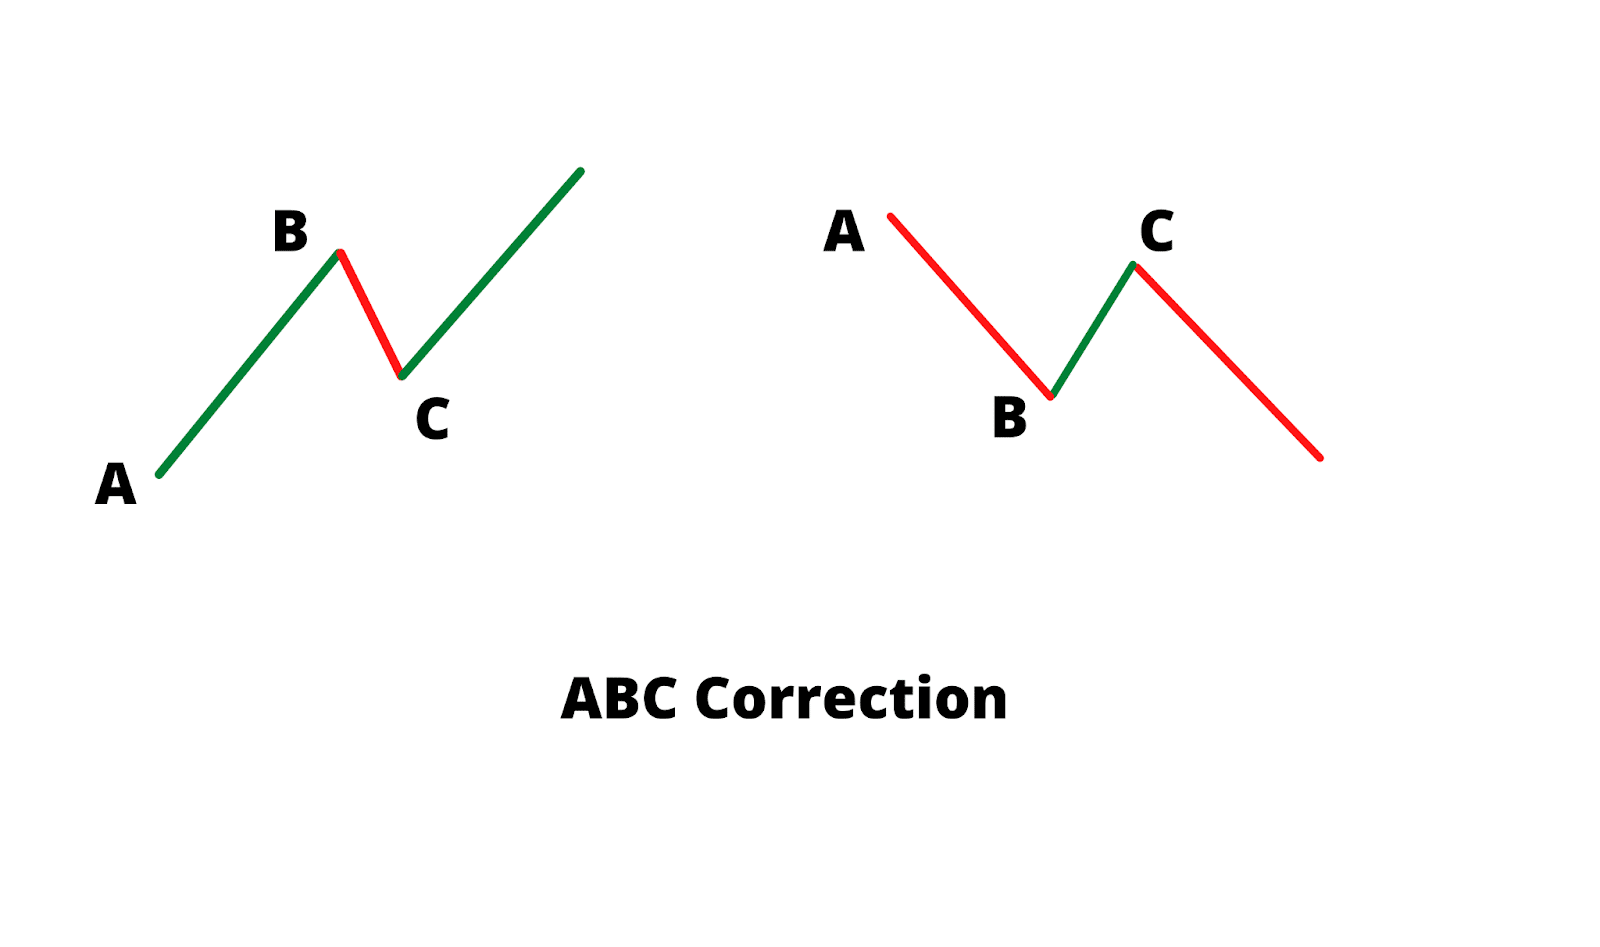 ABC correction